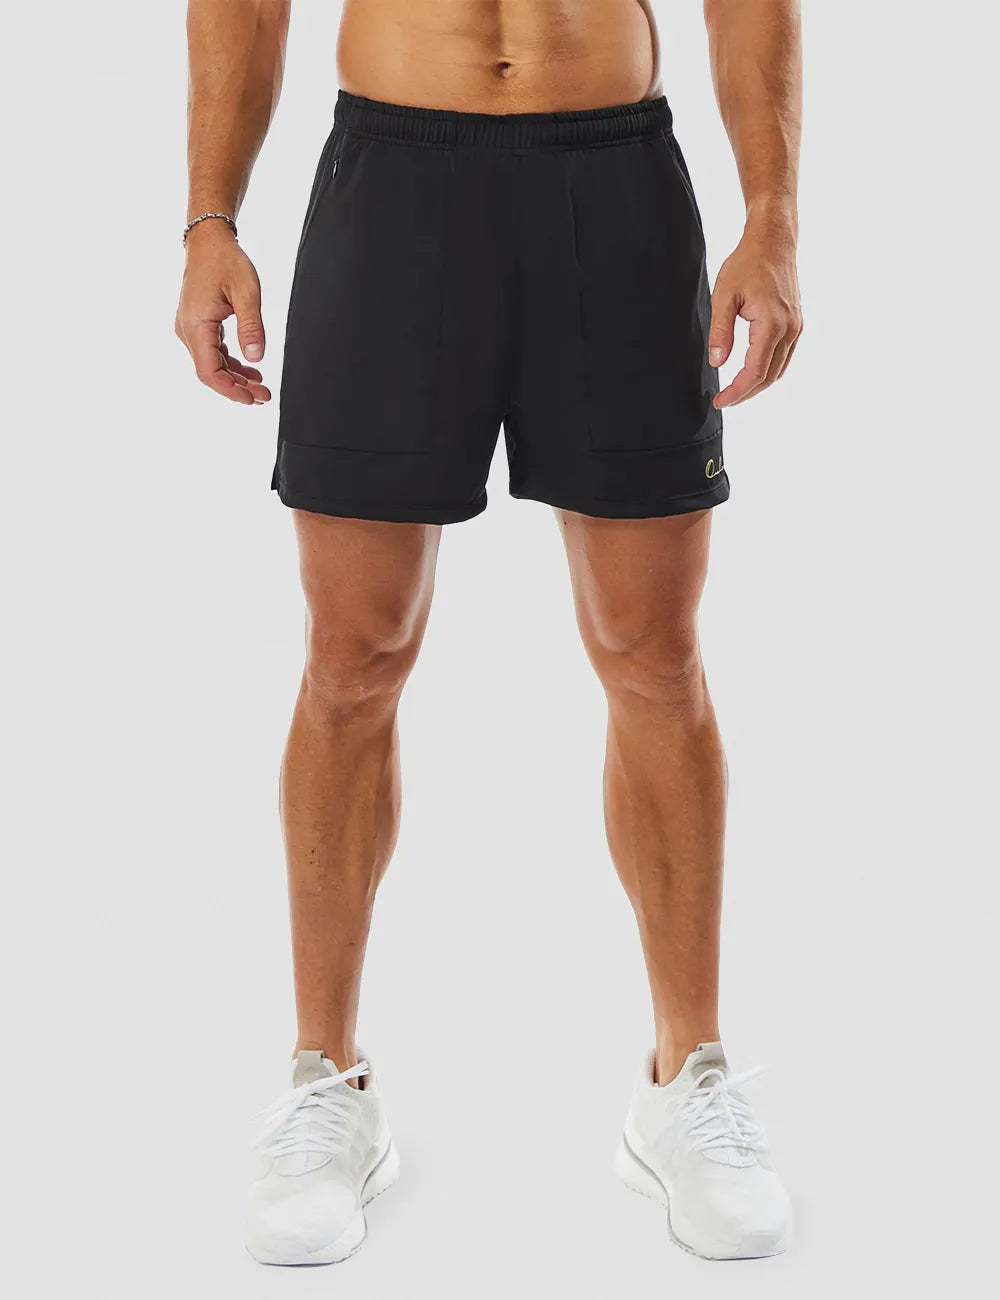 Solid Gym Shorts 5" - Black